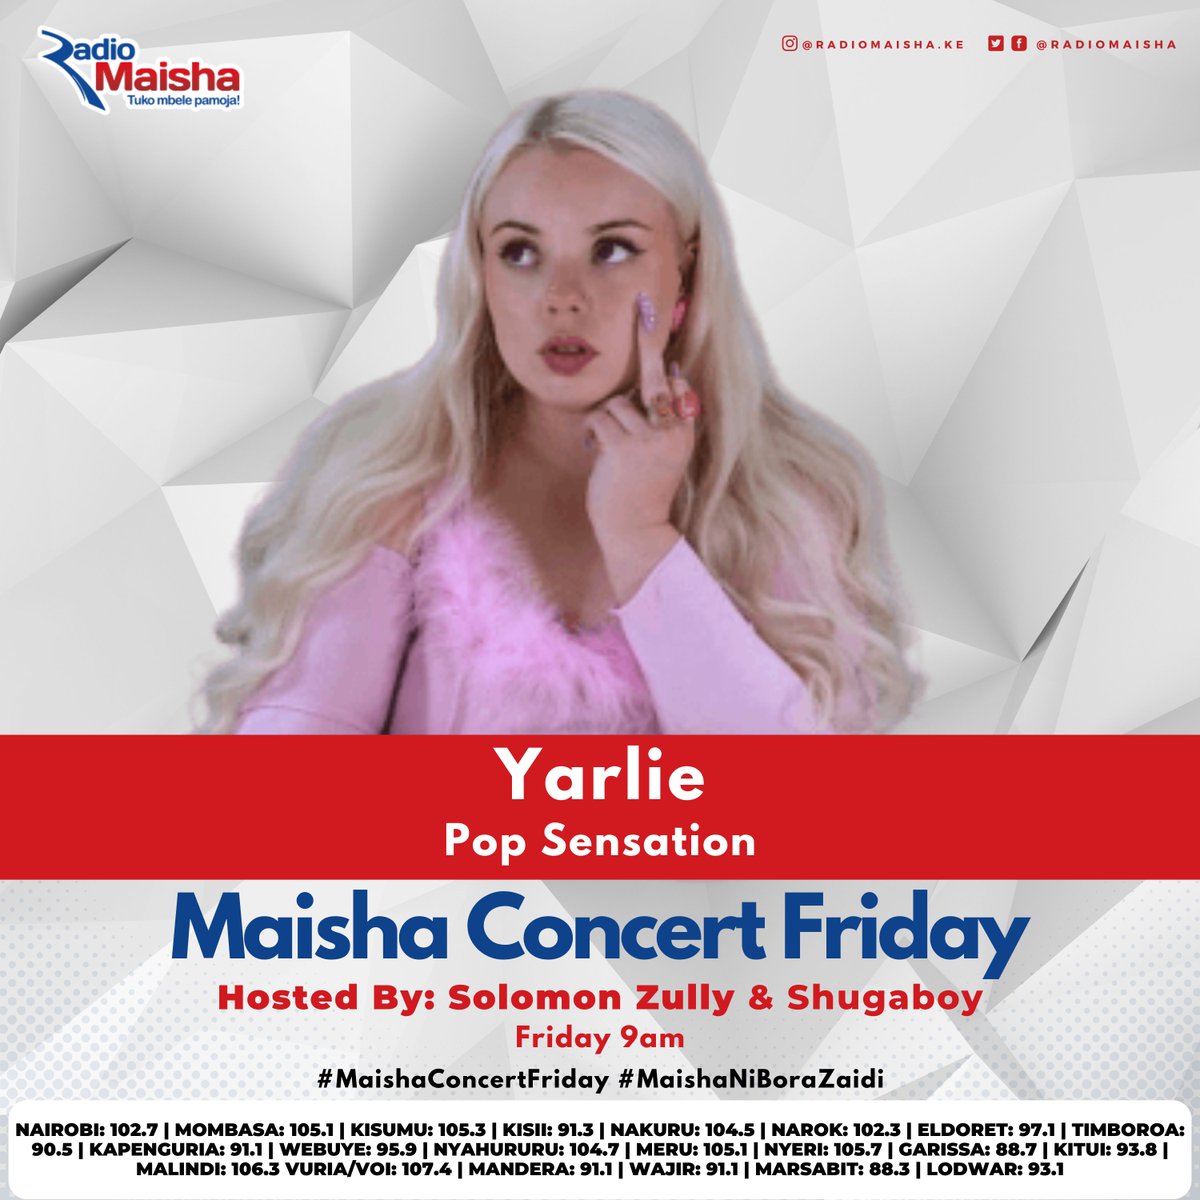 Let's party on Maisha Concert Friday with our guests Awinja and Yarlie. #MaishaConcertFriday #MaishaNiBoraZaidi #RadioZaidiYaRadio